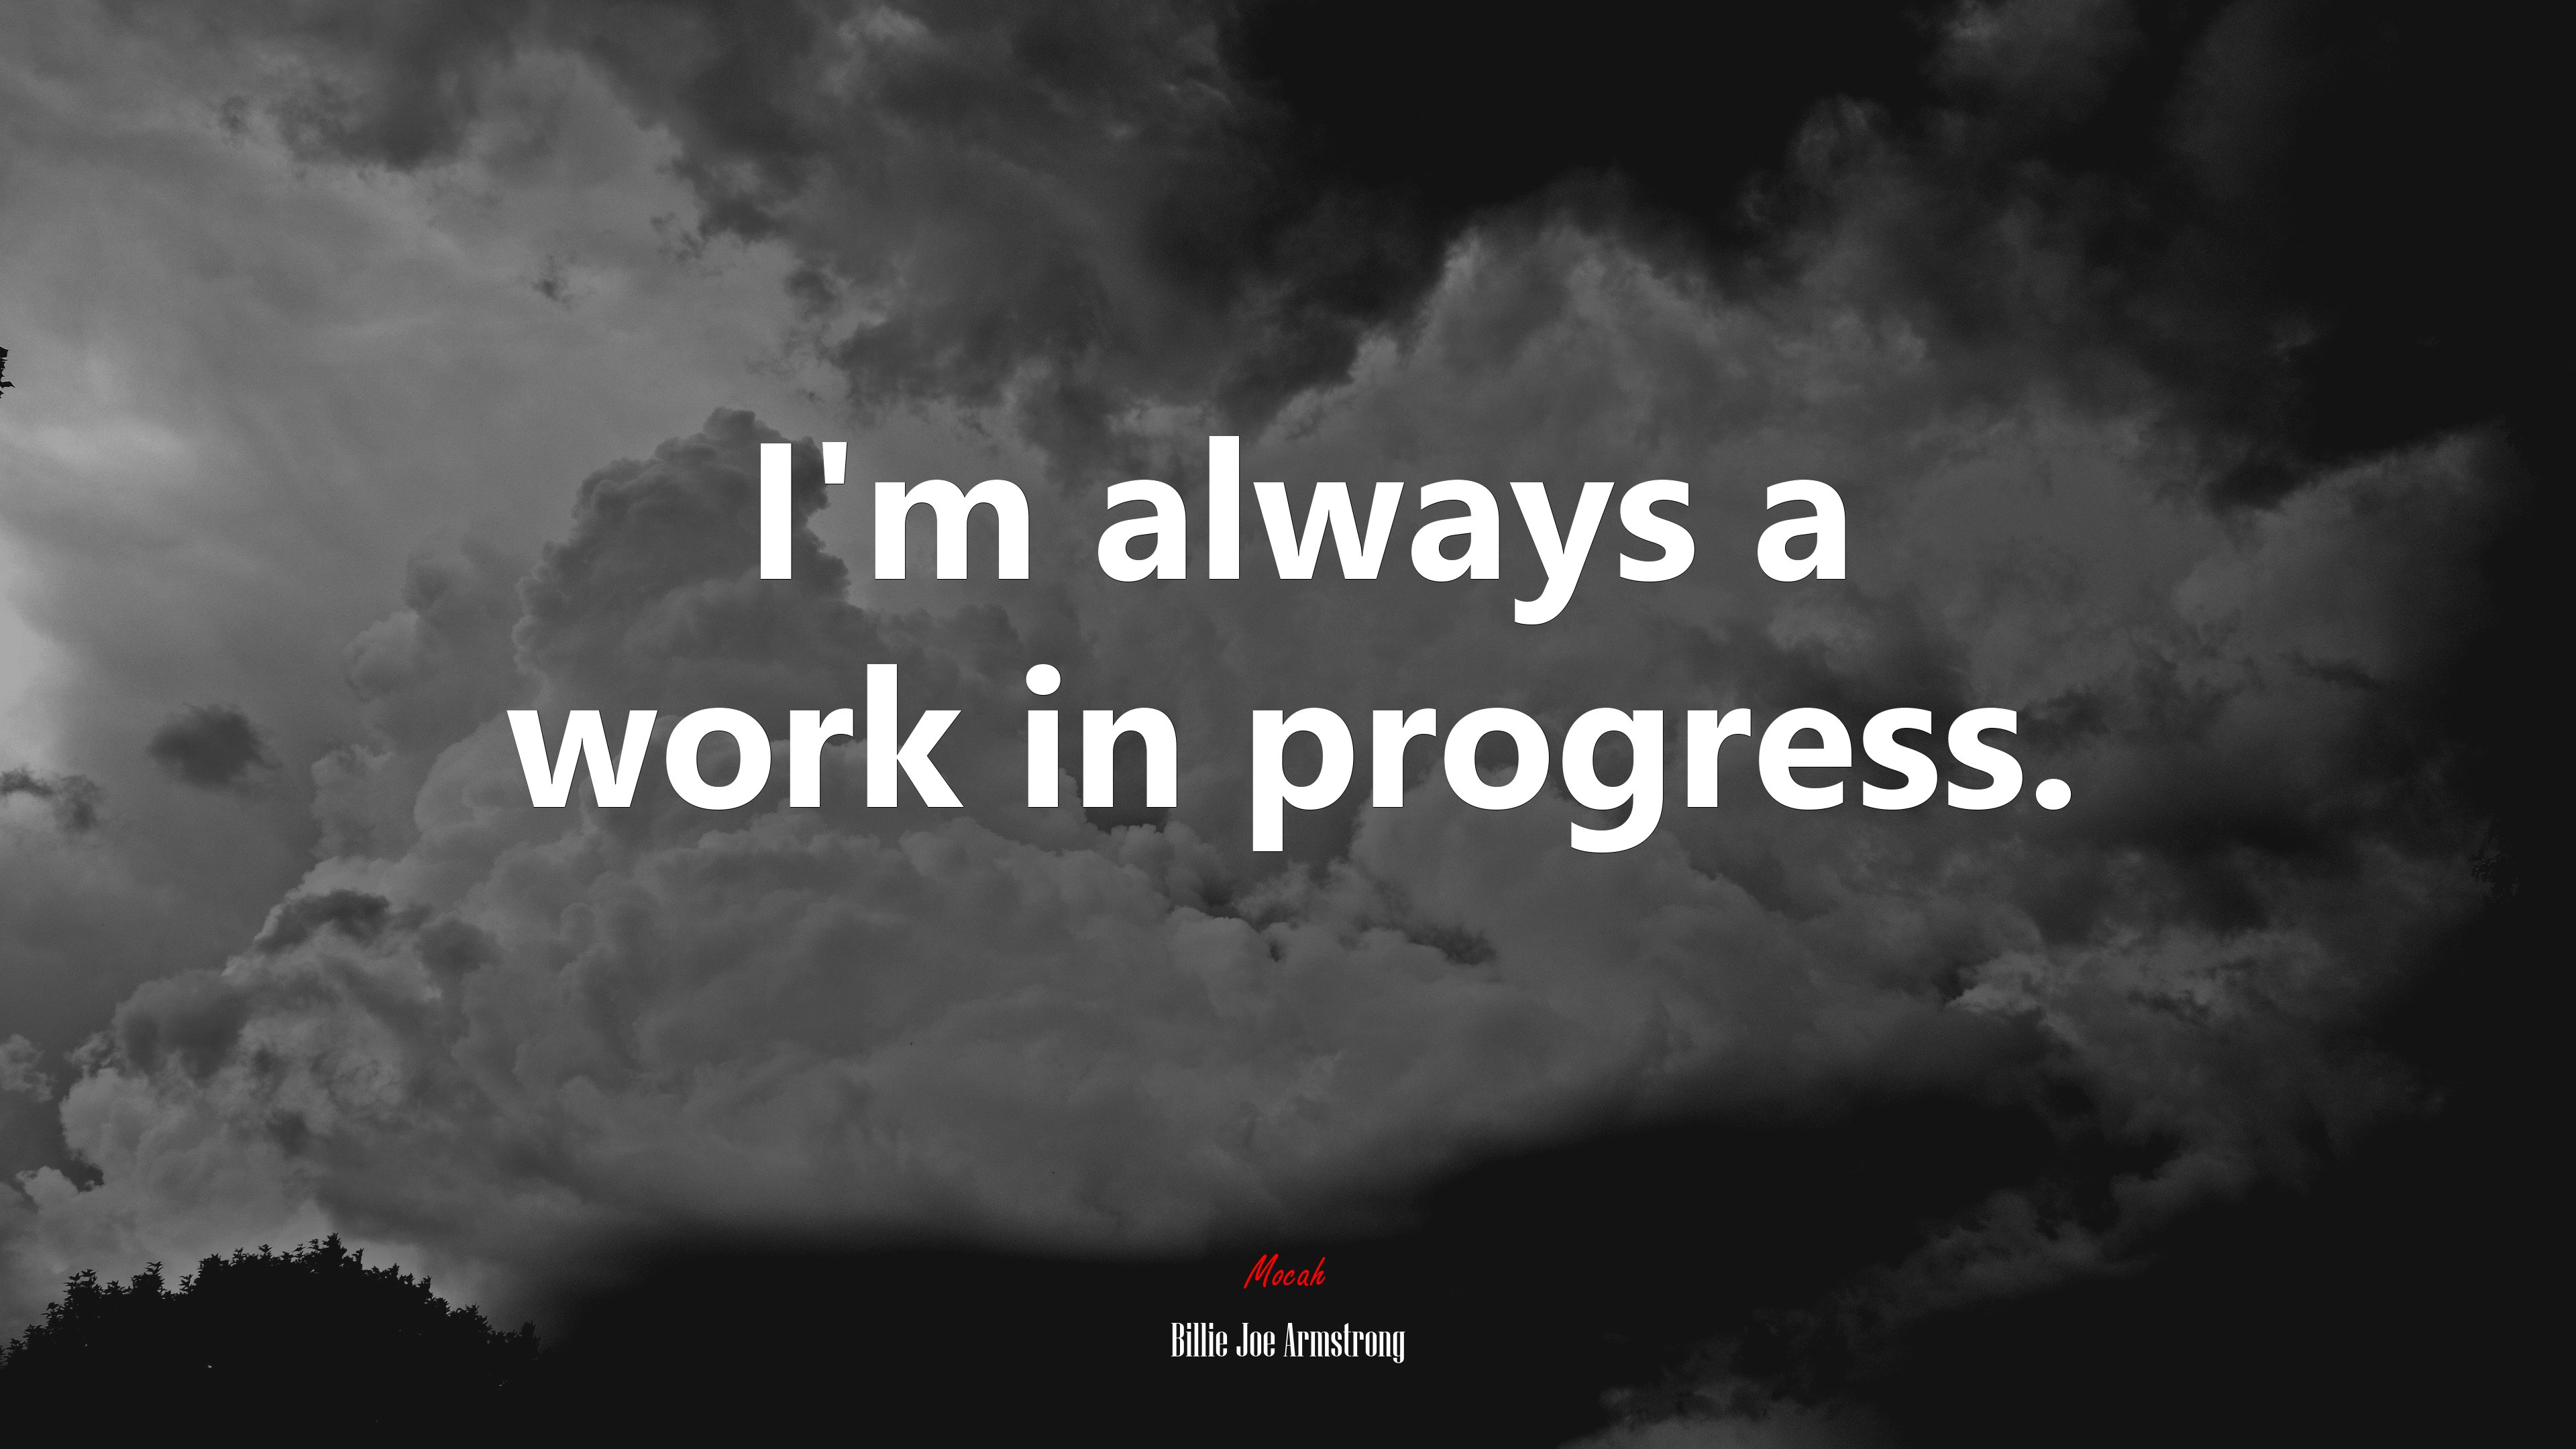 I'm always a work in progress. Billie Joe Armstrong quote Gallery HD Wallpaper